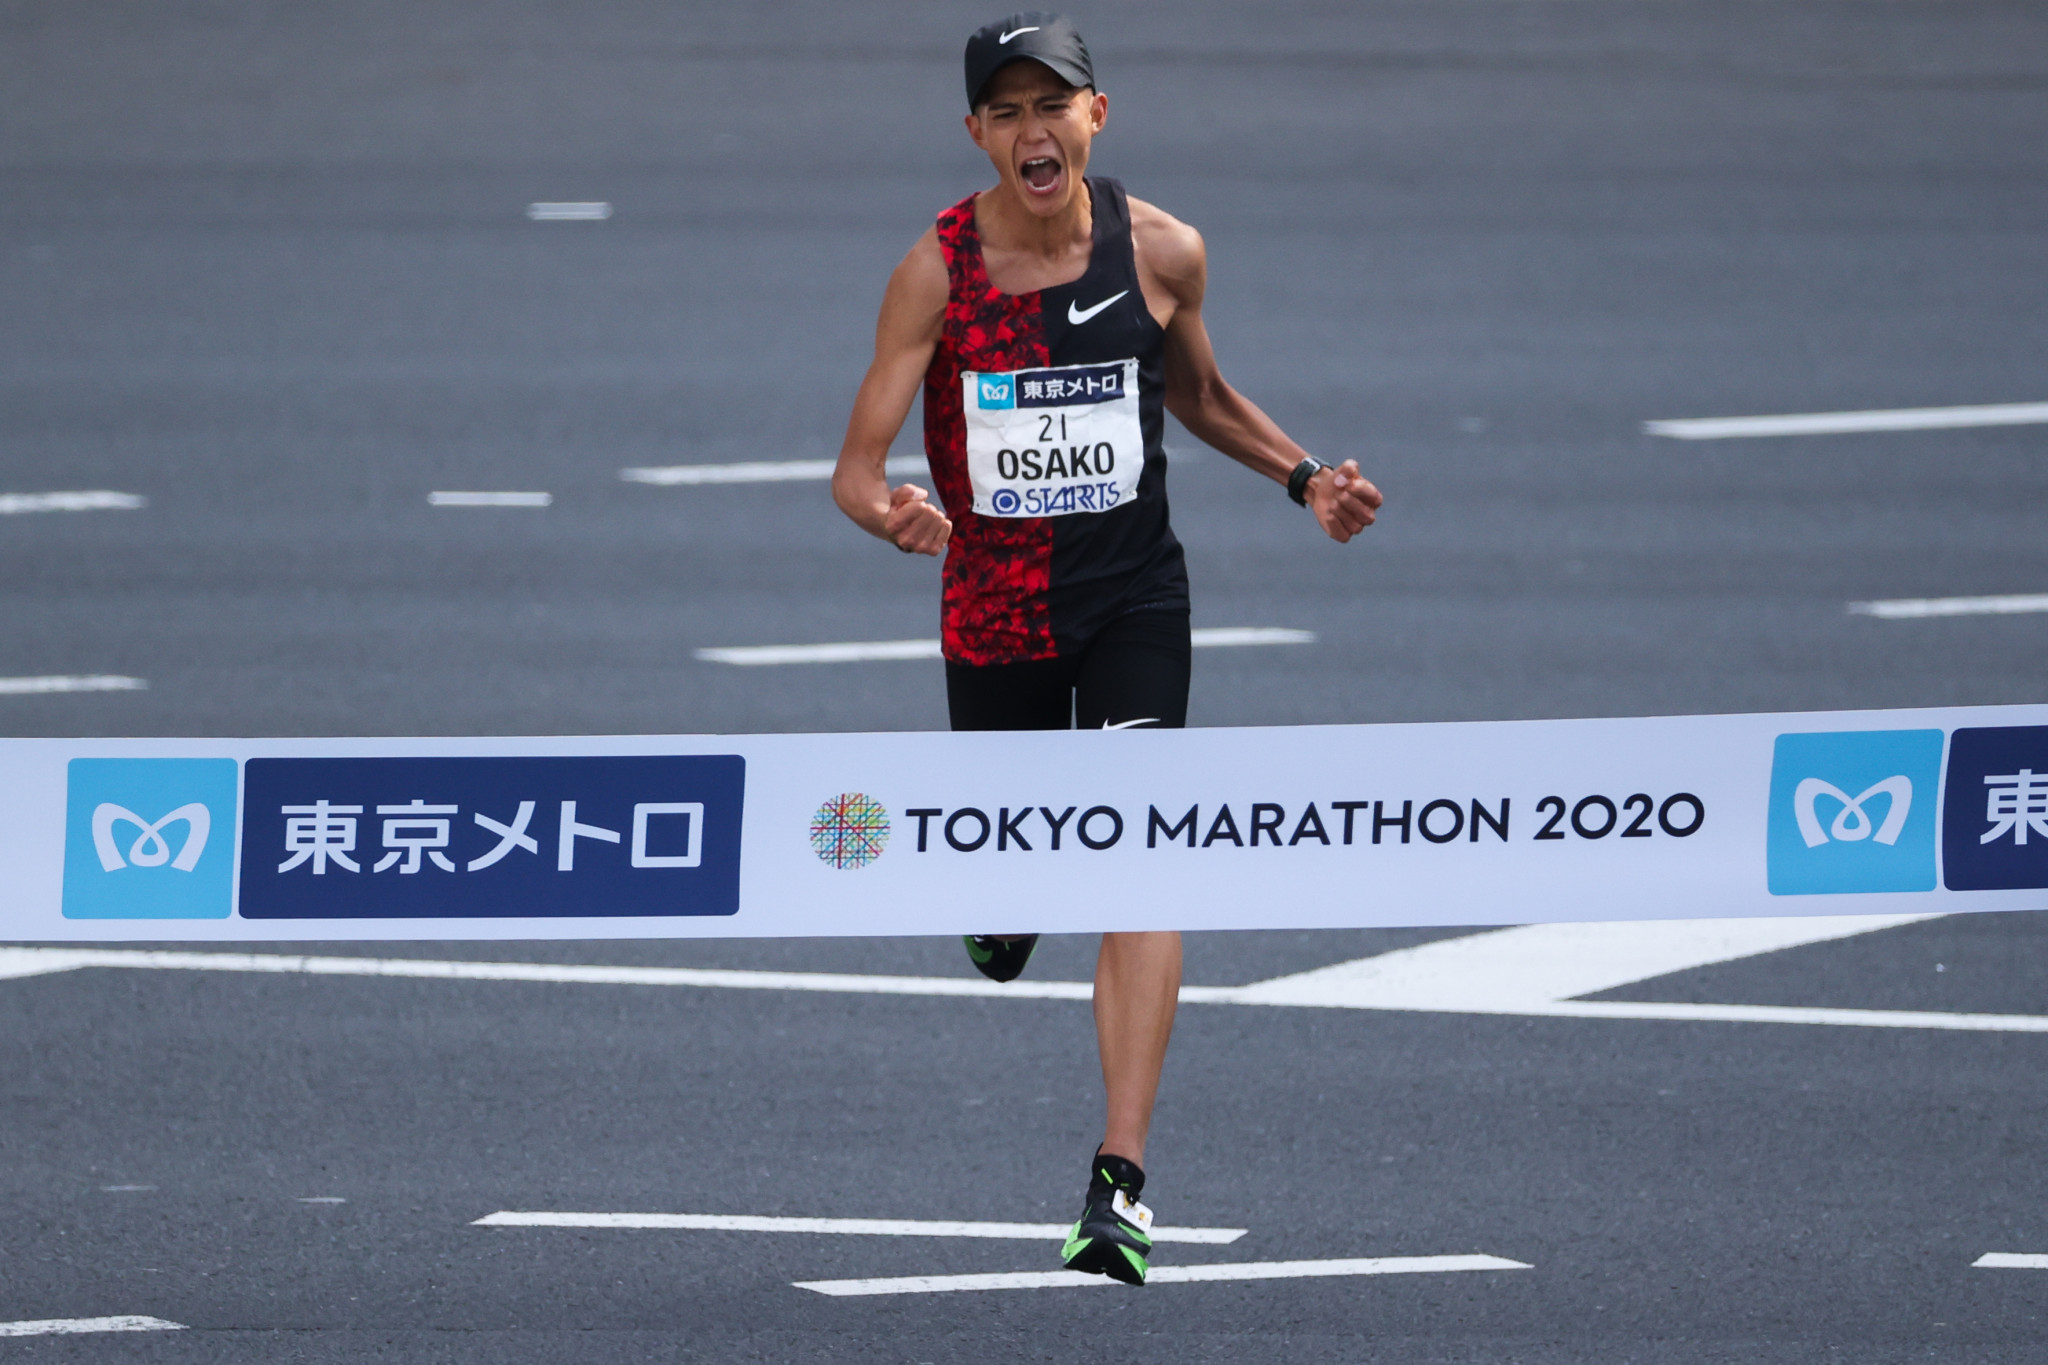 Ichiyama and Osako complete Japanese marathon squads for Tokyo 2020